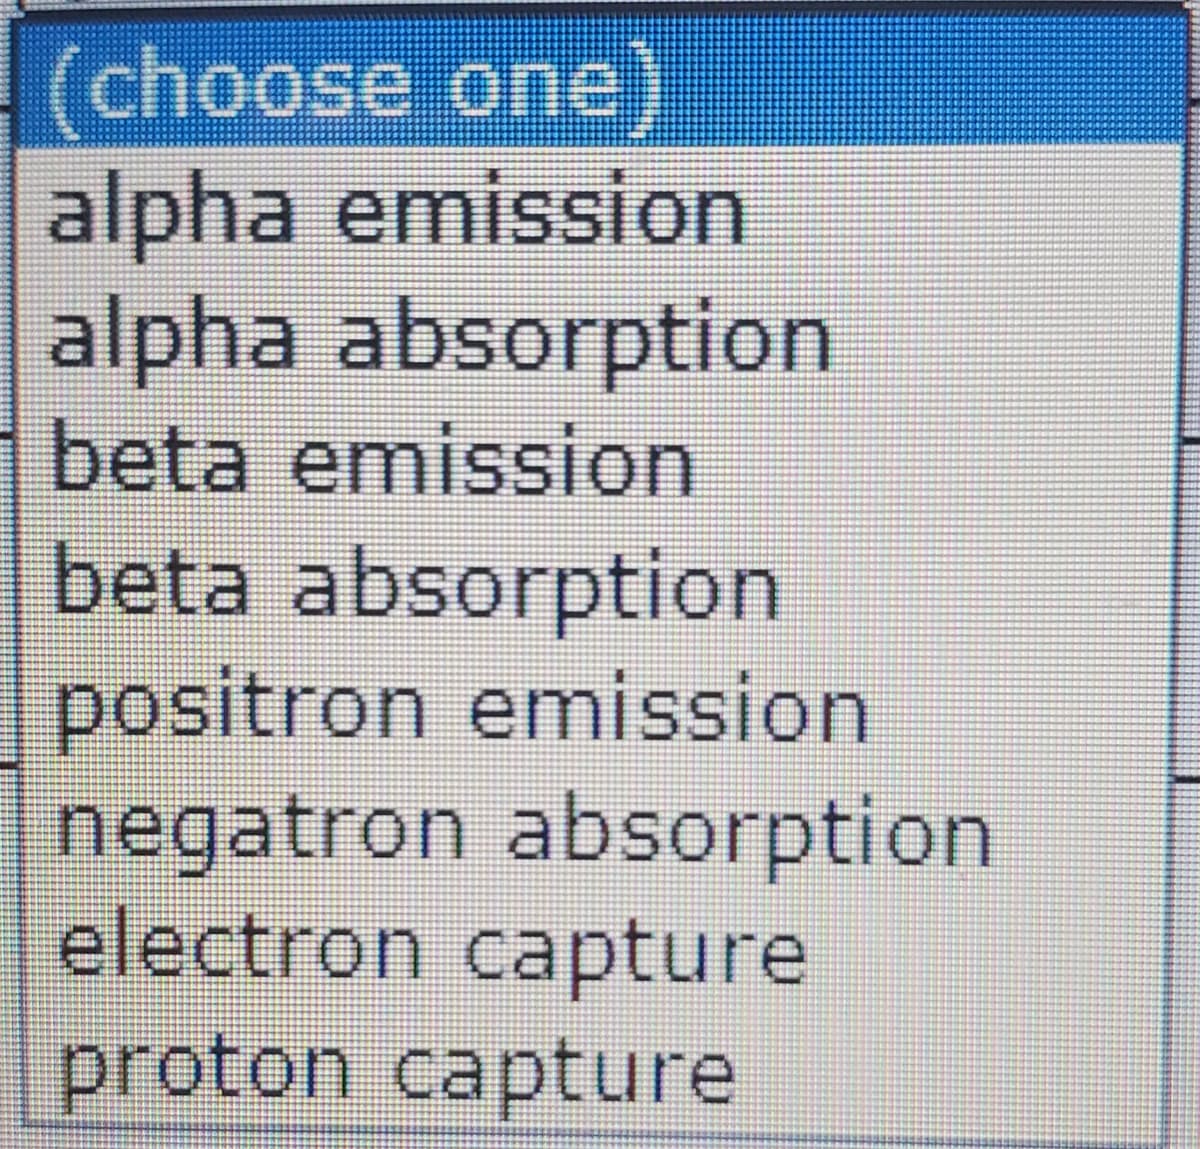 (choose one)
alpha emission
alpha absorption
beta emission
beta absorption
positron emission
negatron absorption
electron capture
proton capture
